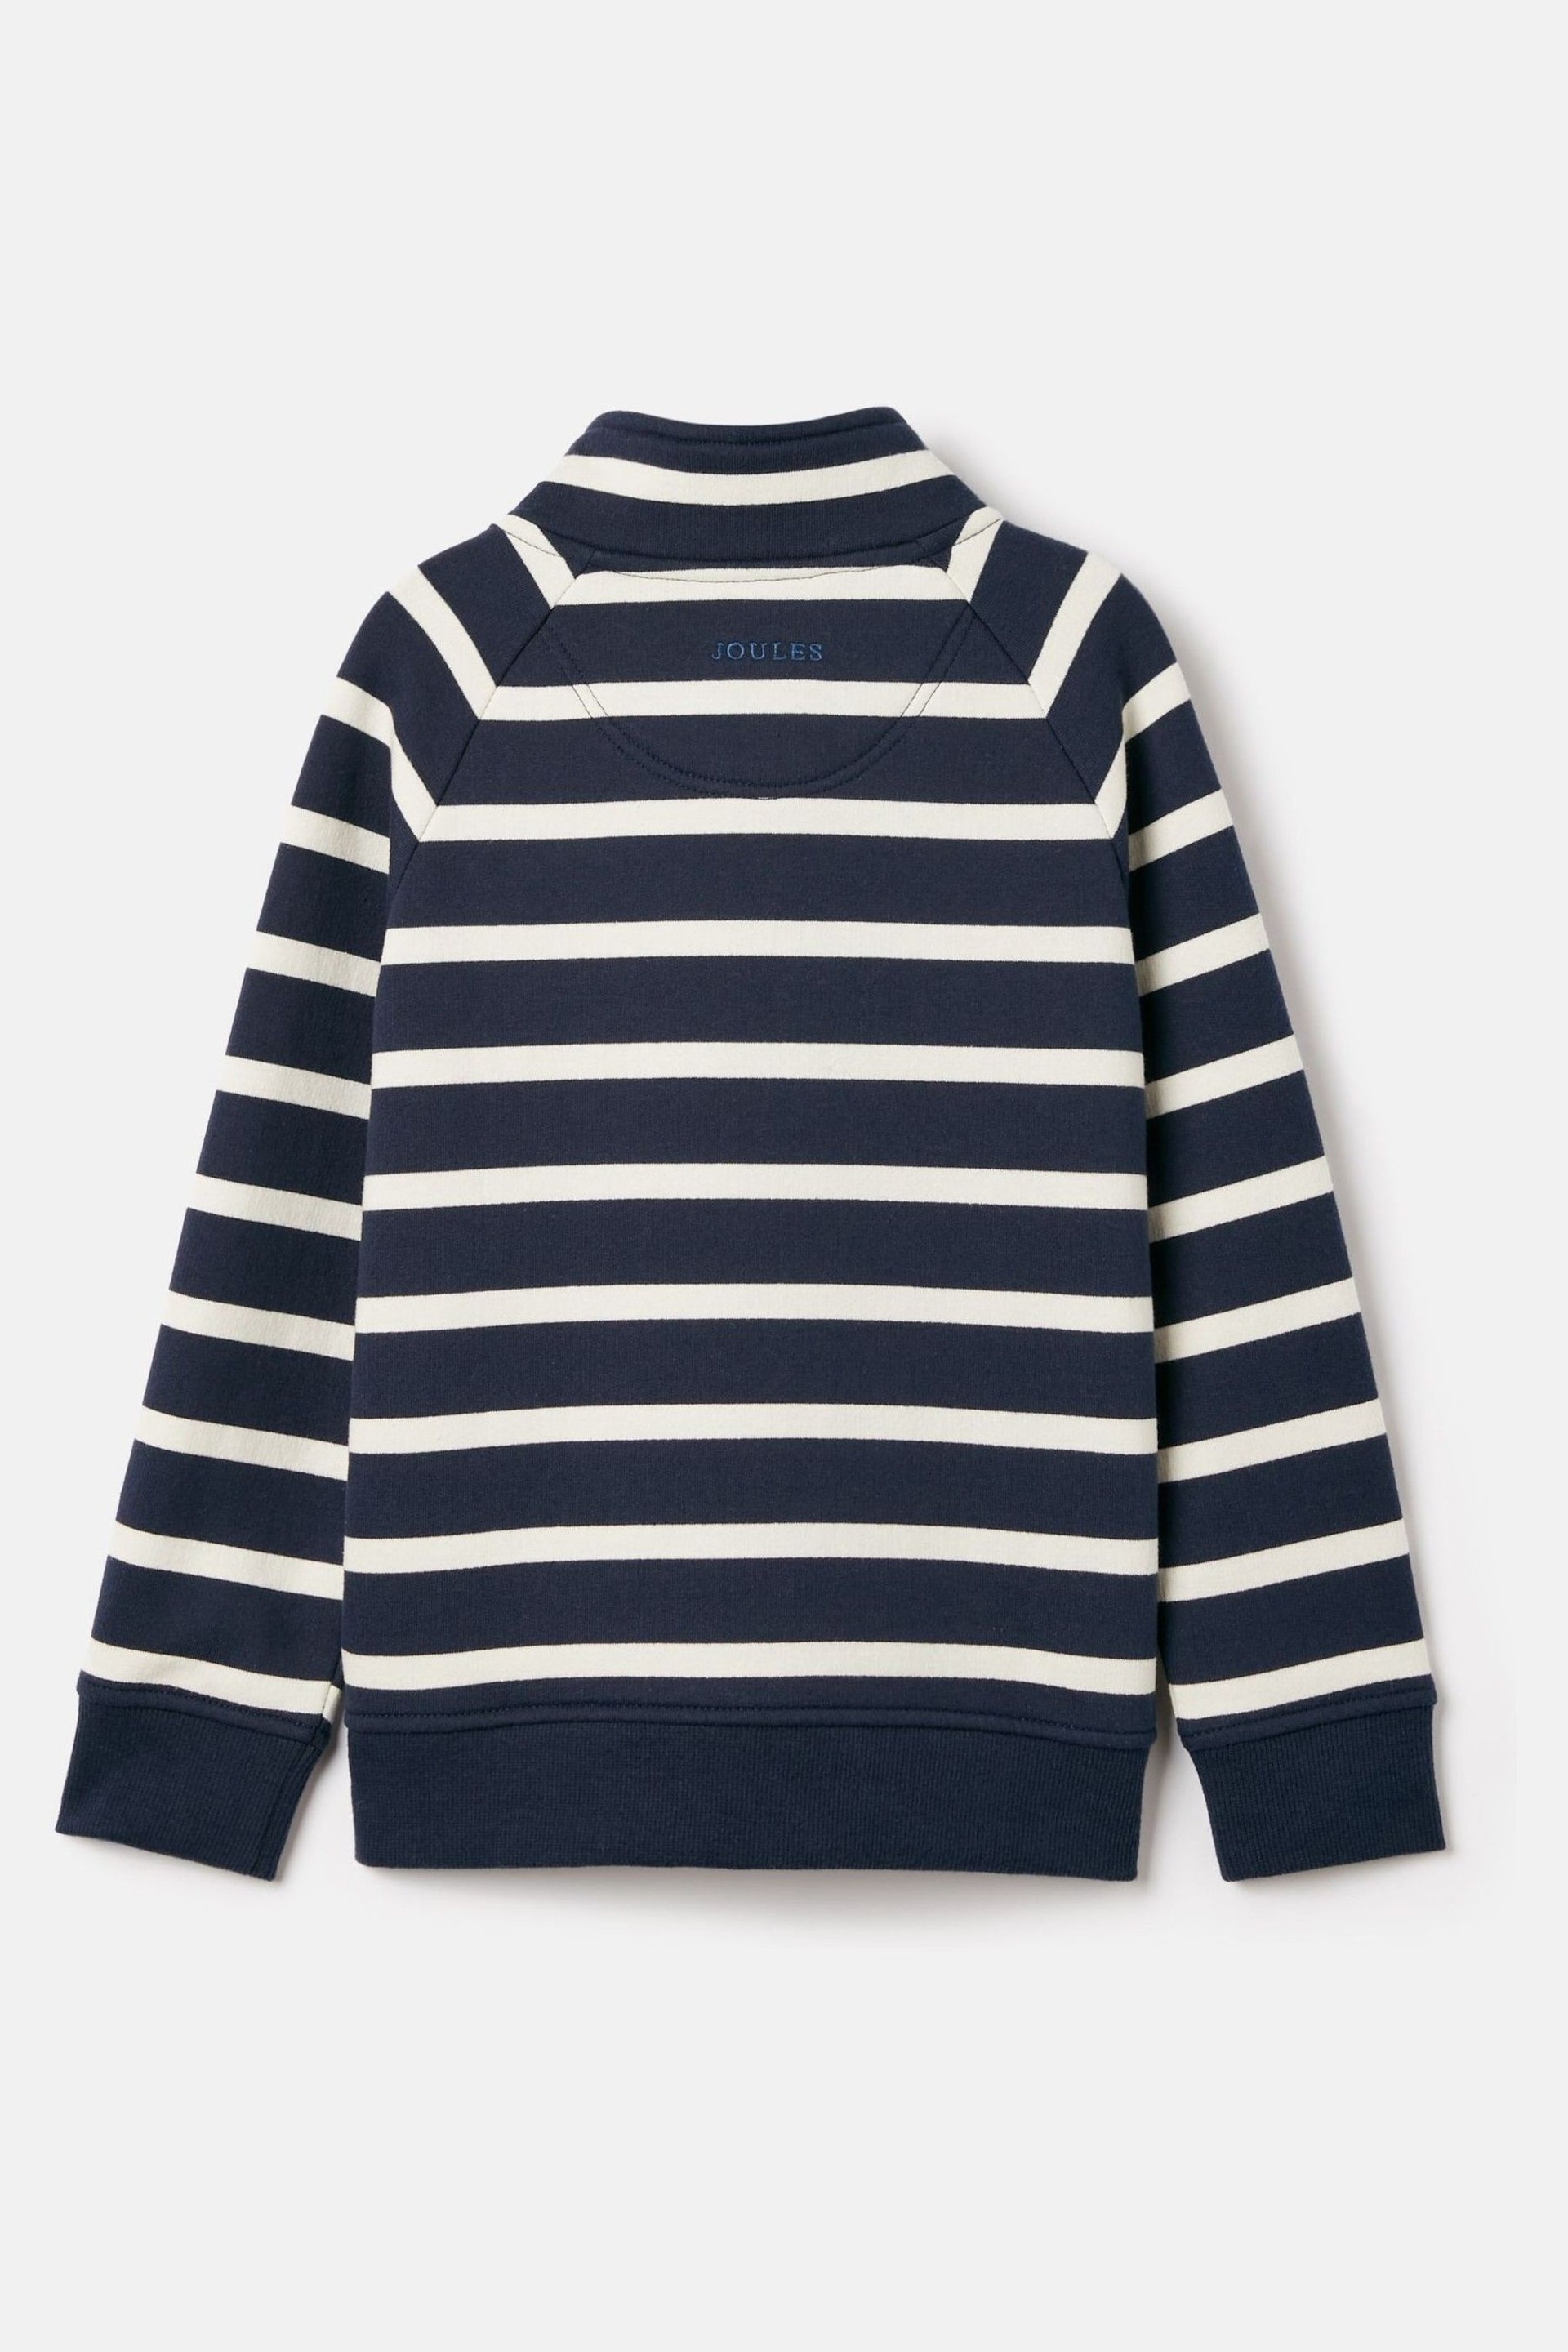 Joules Finn Navy & White Striped Quarter Zip Sweatshirt - Image 7 of 11